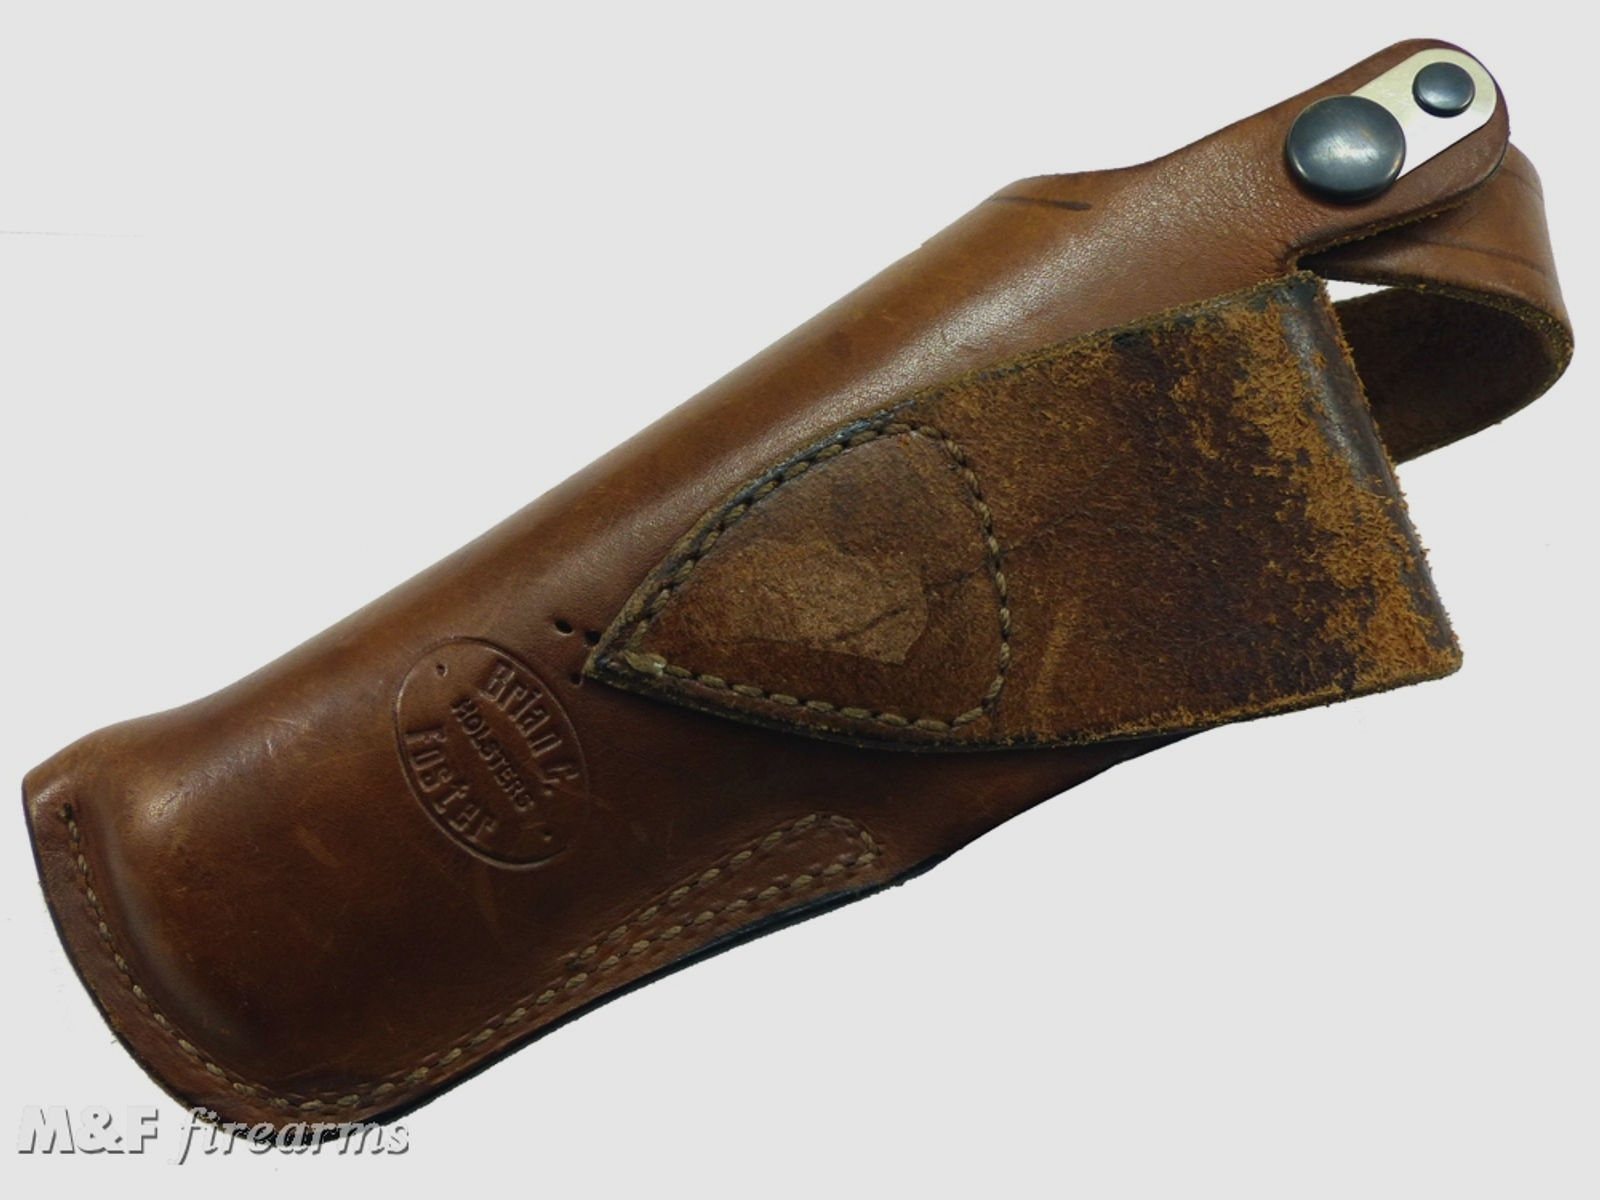 Ziviles Pistolen-Holster (Gürtelholster) für Colt 1911 Government 3,5 mm Natur-Rindleder punziert